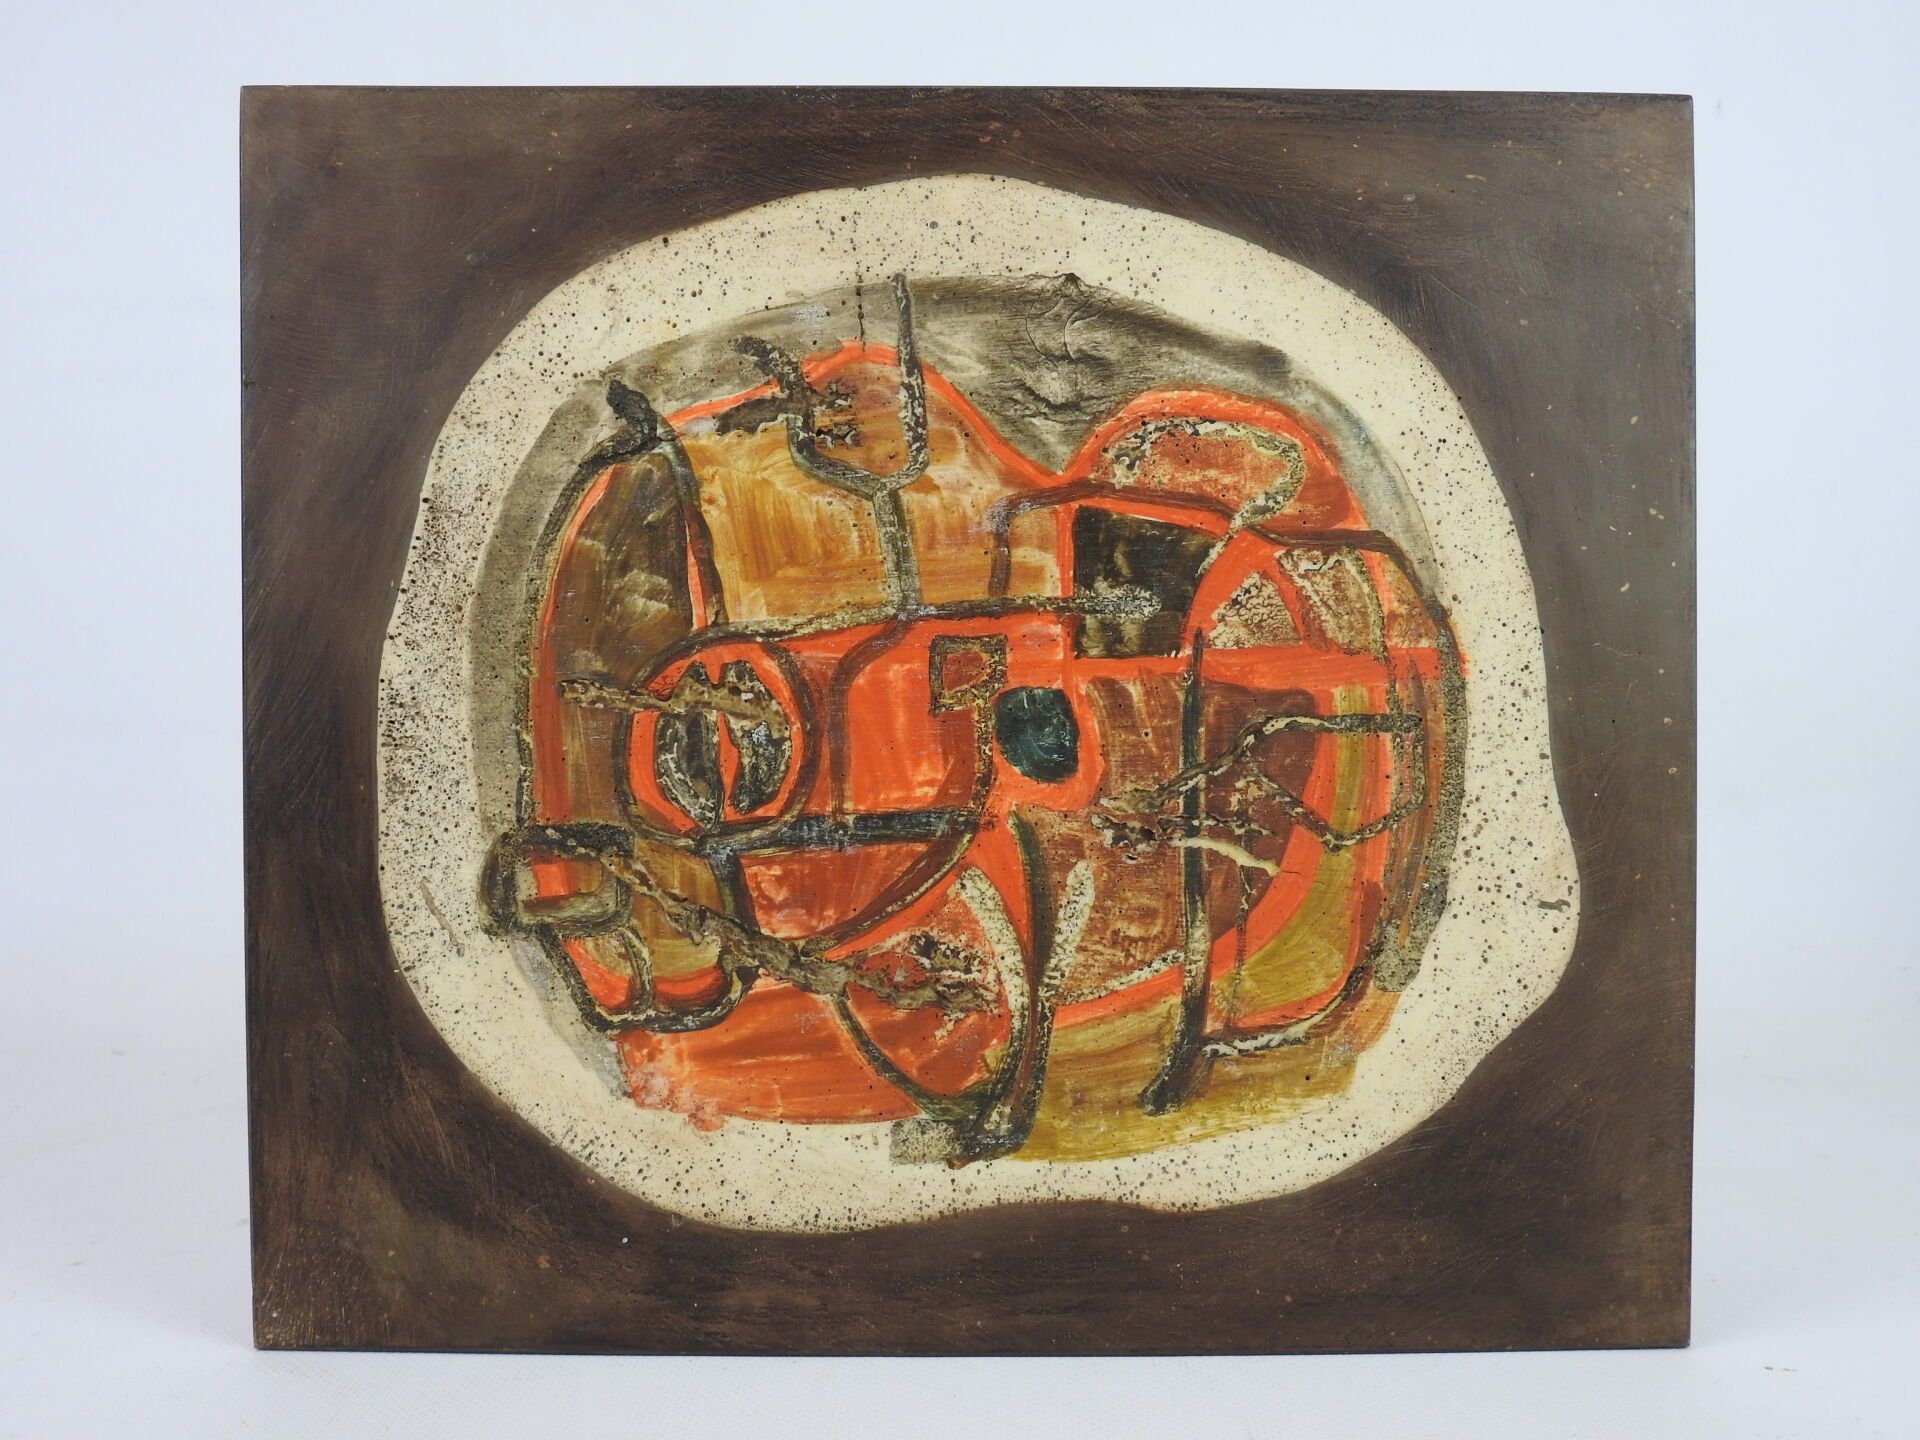 Null 马内西尔(的味道)

复合材料的长方形盘子，有橙色色调的抽象装饰。

27.5 x 31.5厘米